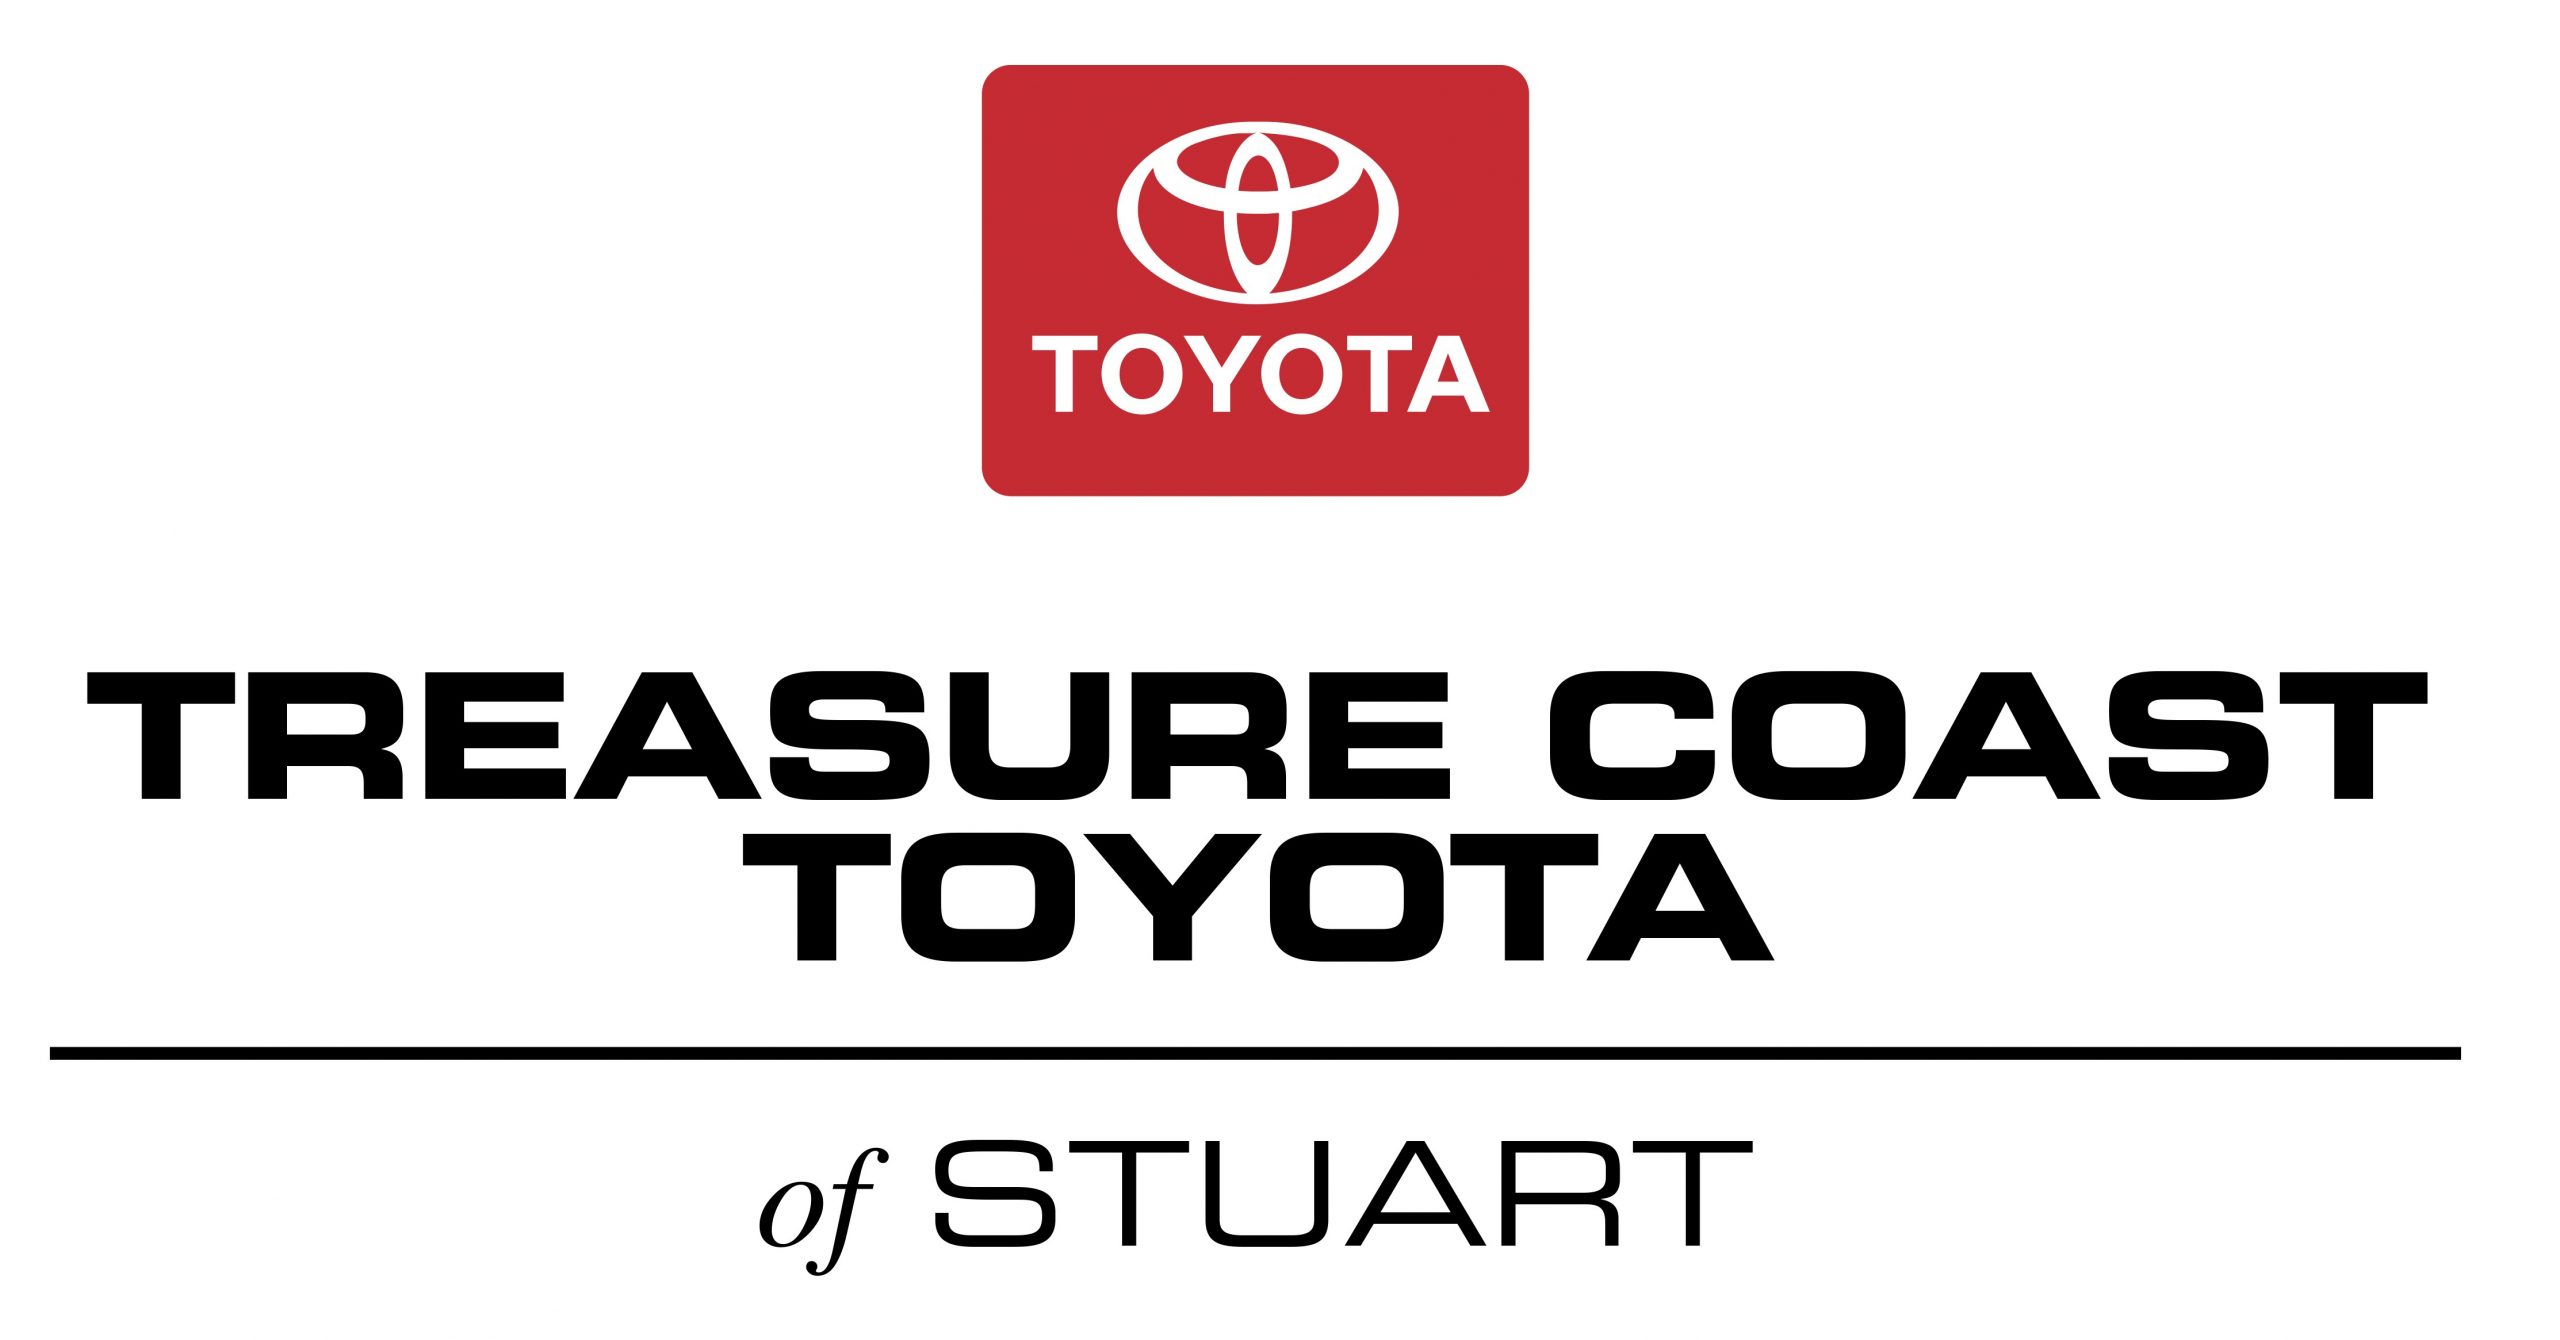 Treasure Coast Toyota logo altered for sign